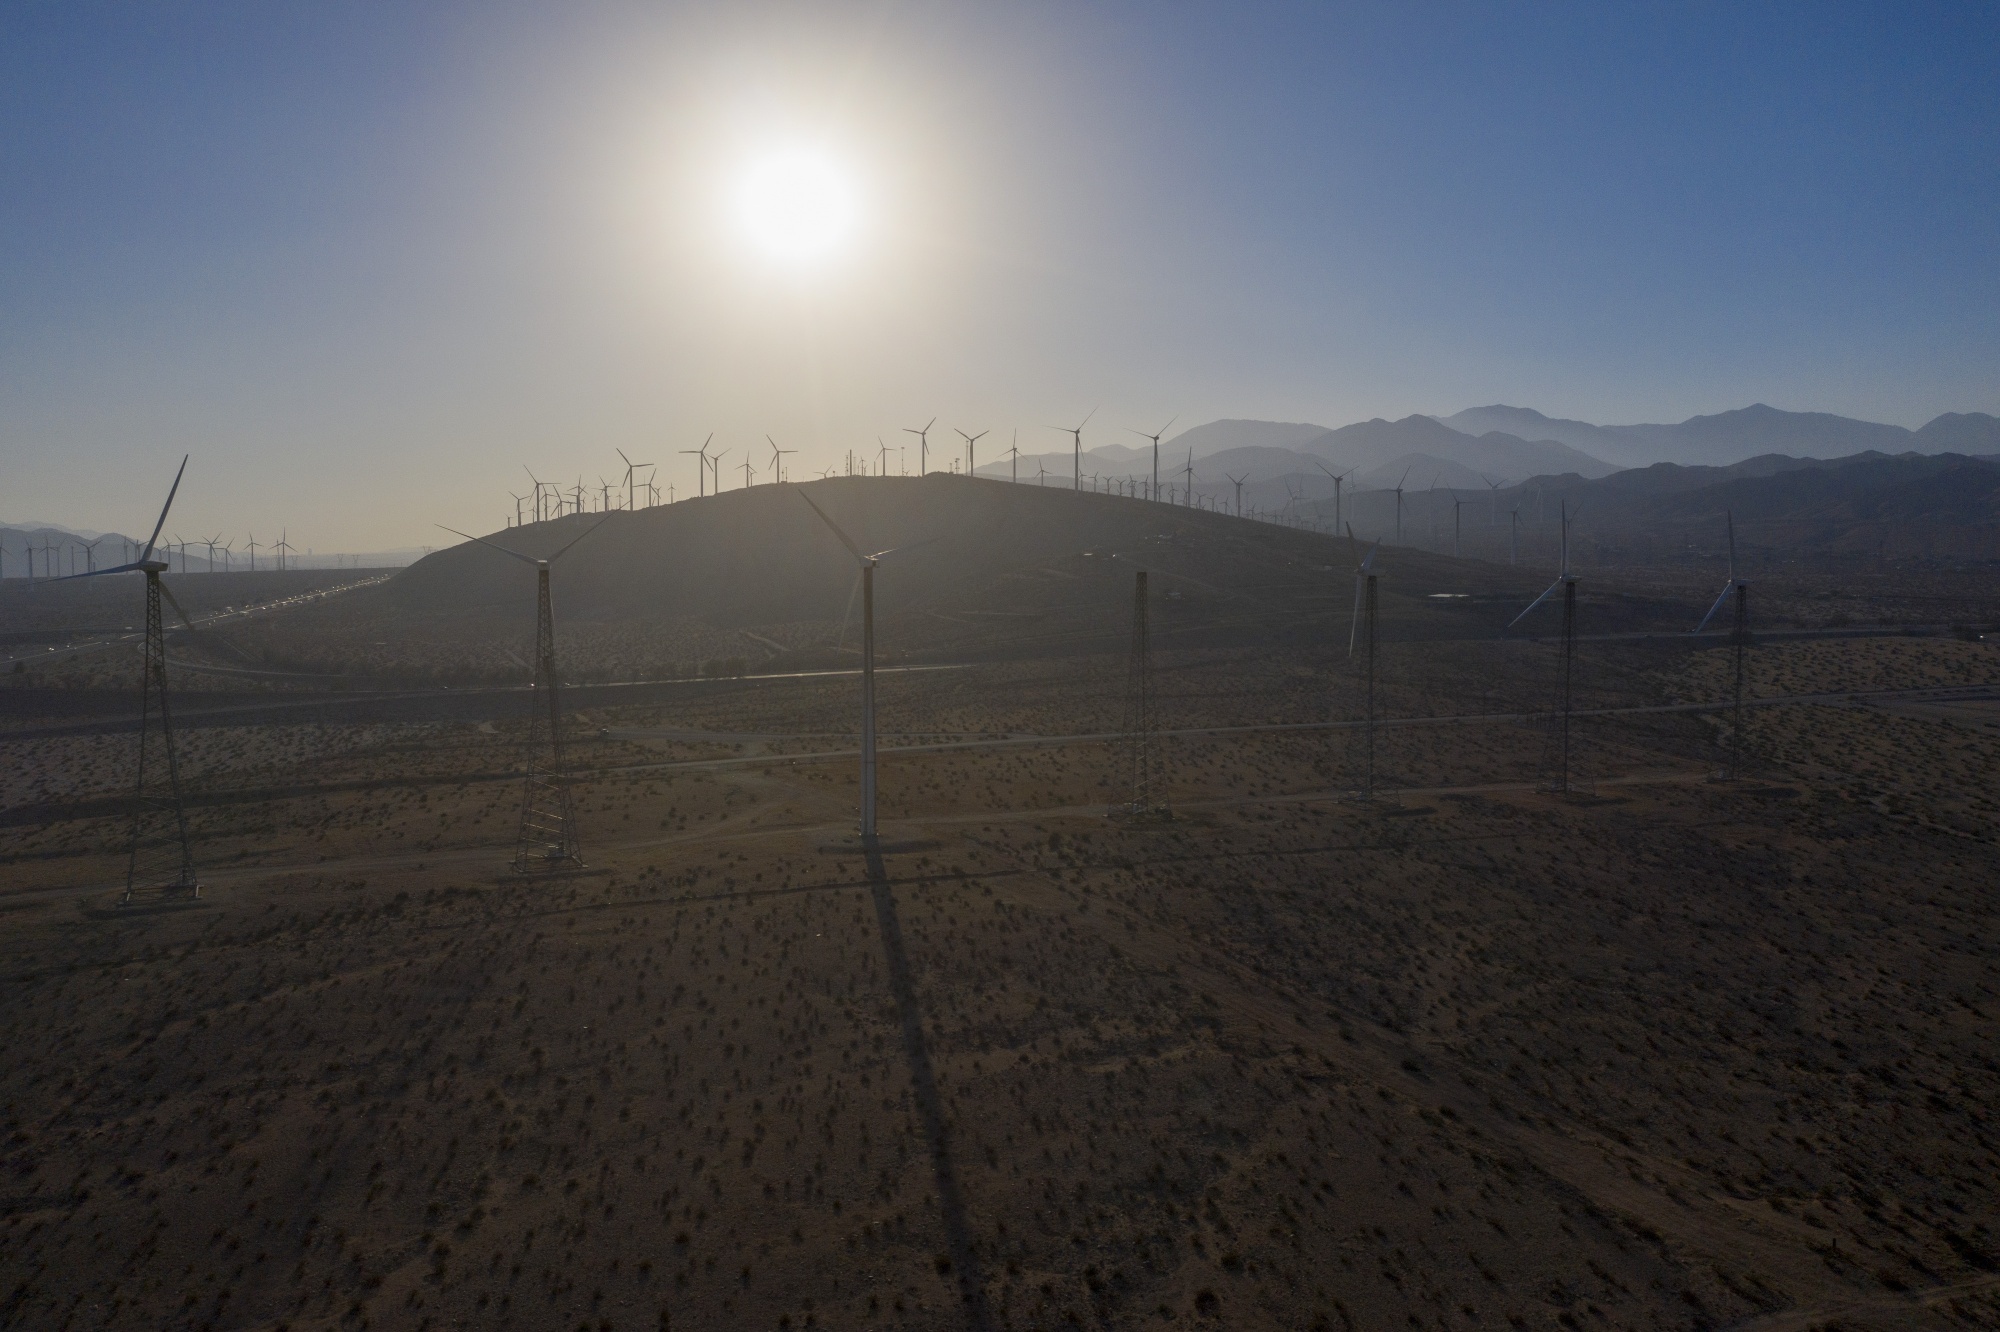 A wind farm in Whitewater, California.